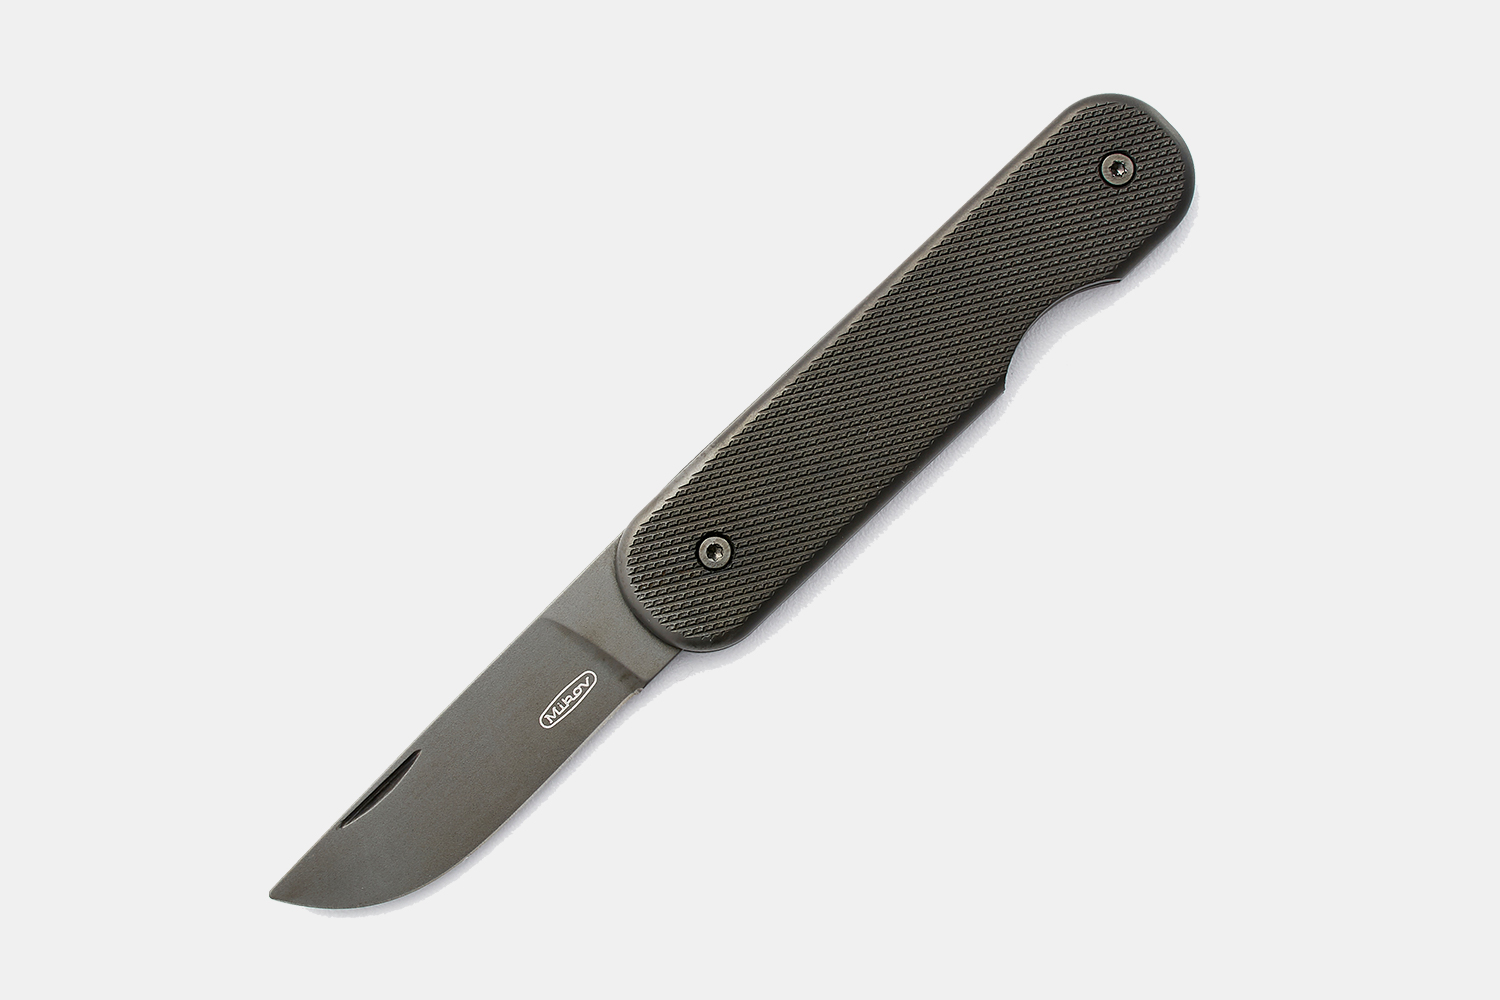 DLC coated pocketknife from Mikov